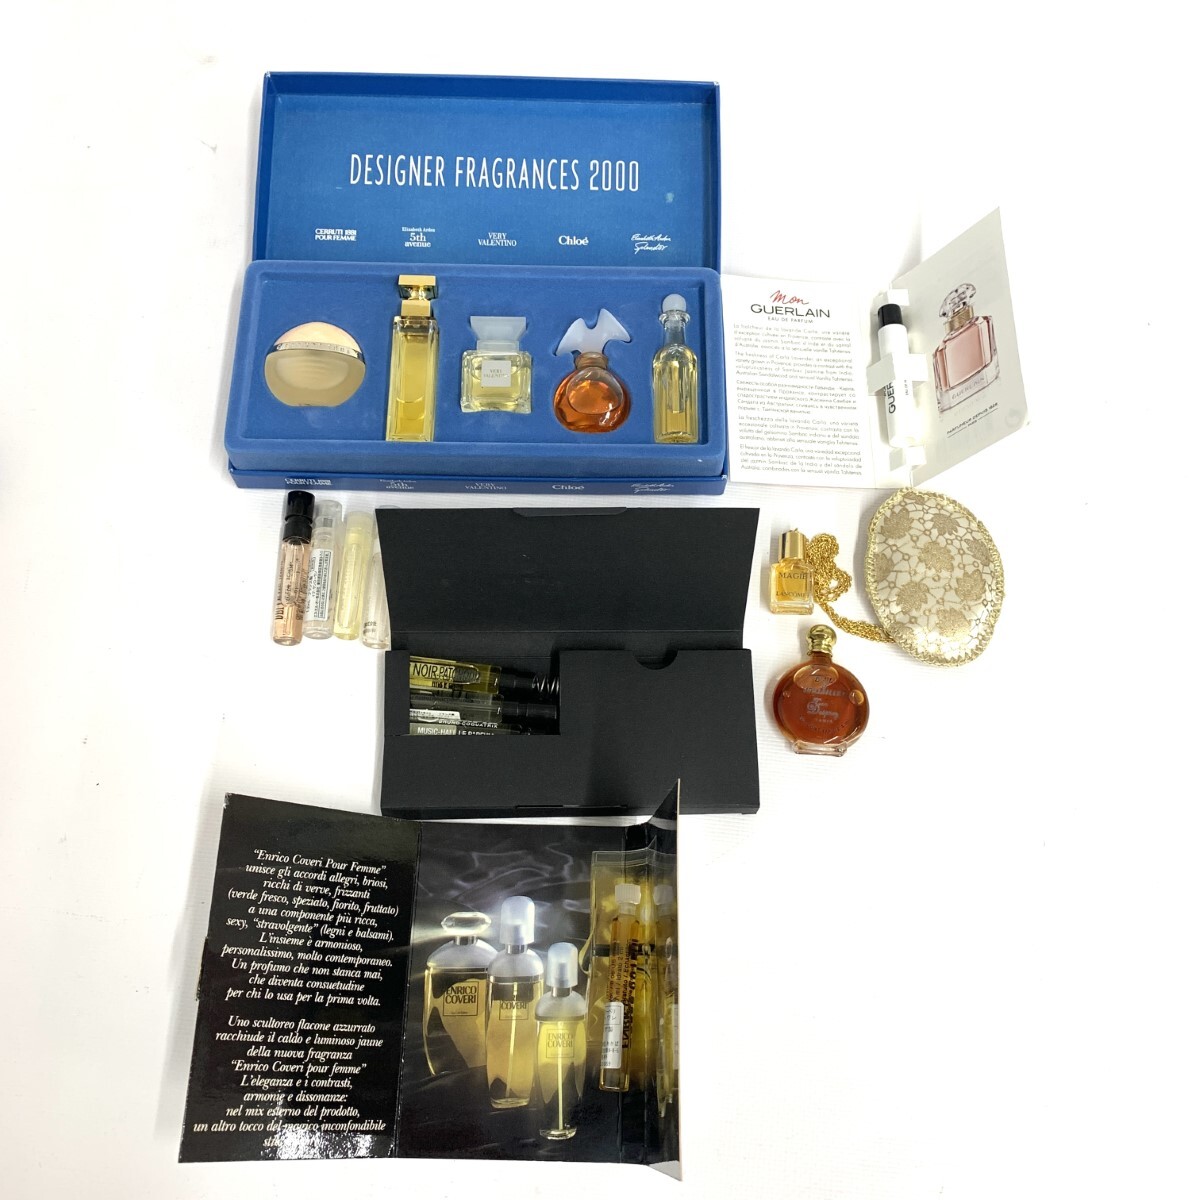  junk * Dior Givenchy Lanvin other Mini perfume * set sale set Pal famfragrance fragrance 